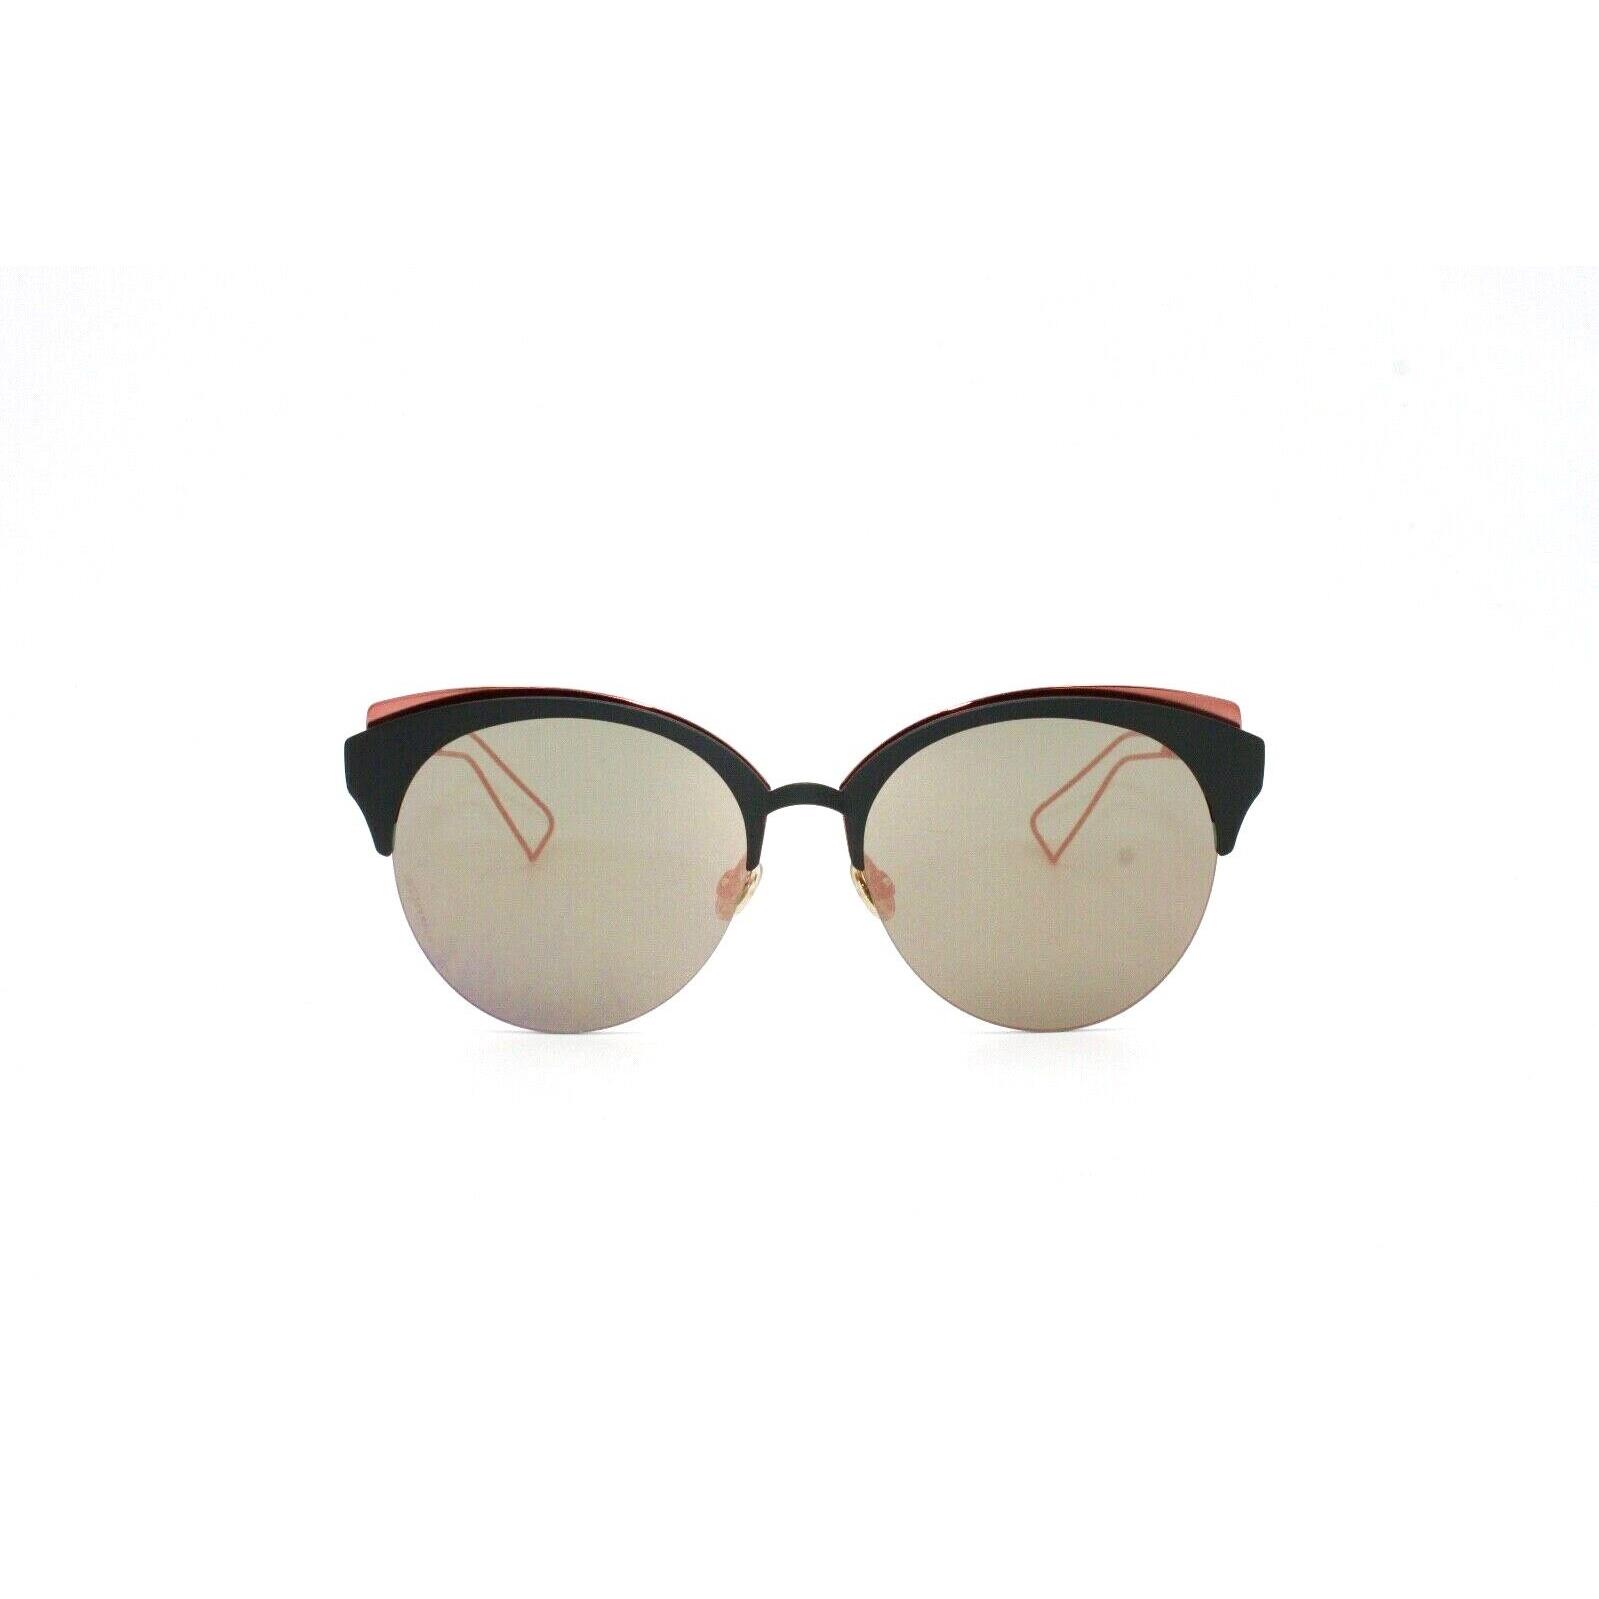 Christian Dior Sunglasses Diorama Club Made in Italy Eyemap 55-18-150